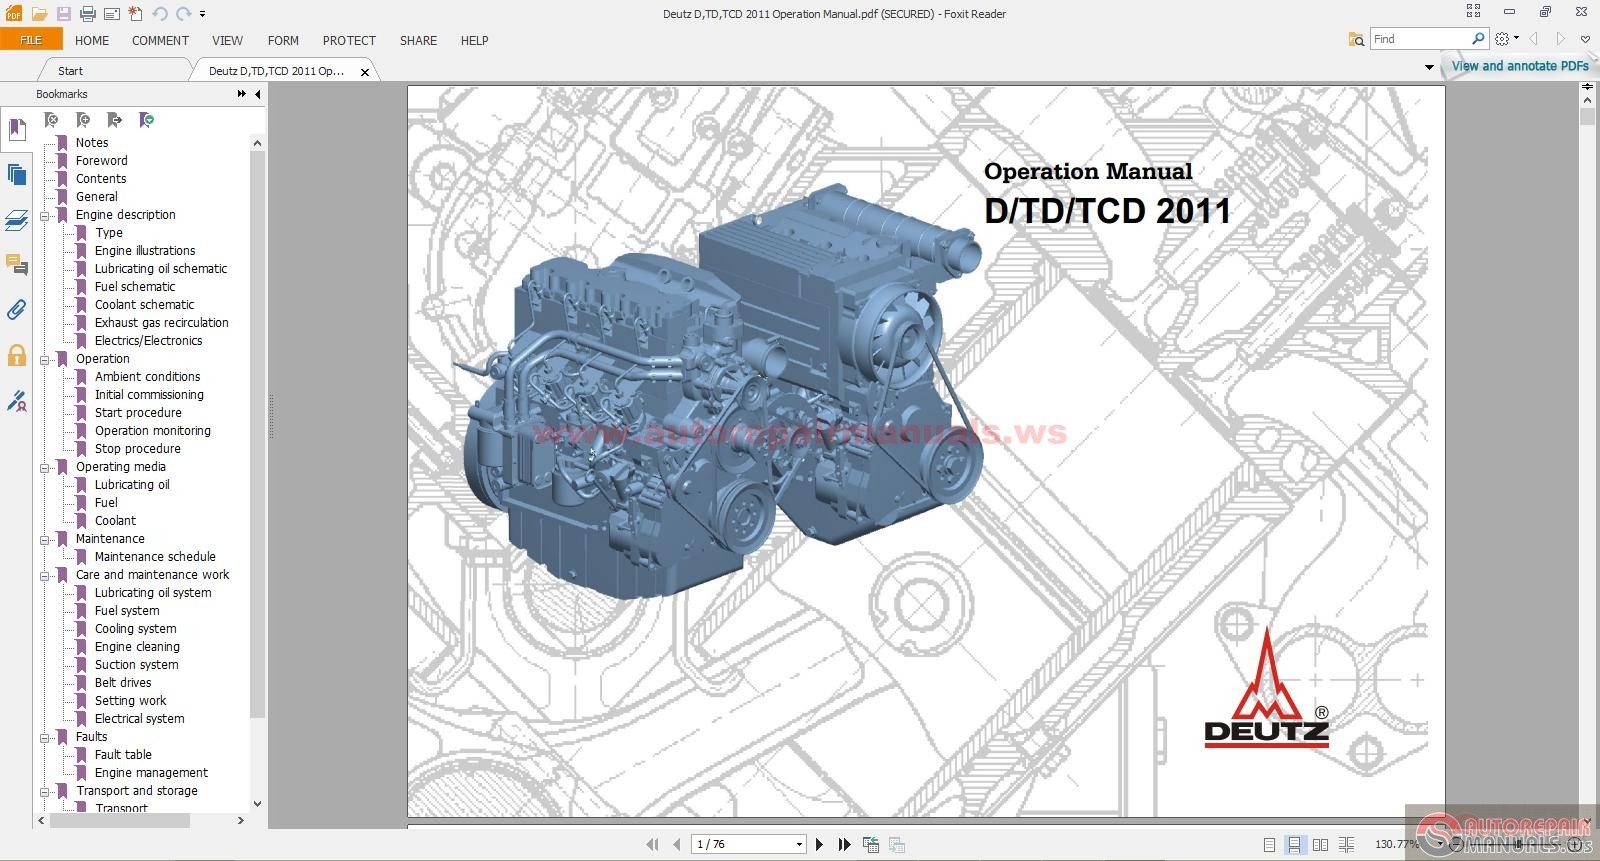 Deutz D,TD,TCD 2011 Operation Manual | Auto Repair Manual Forum ...